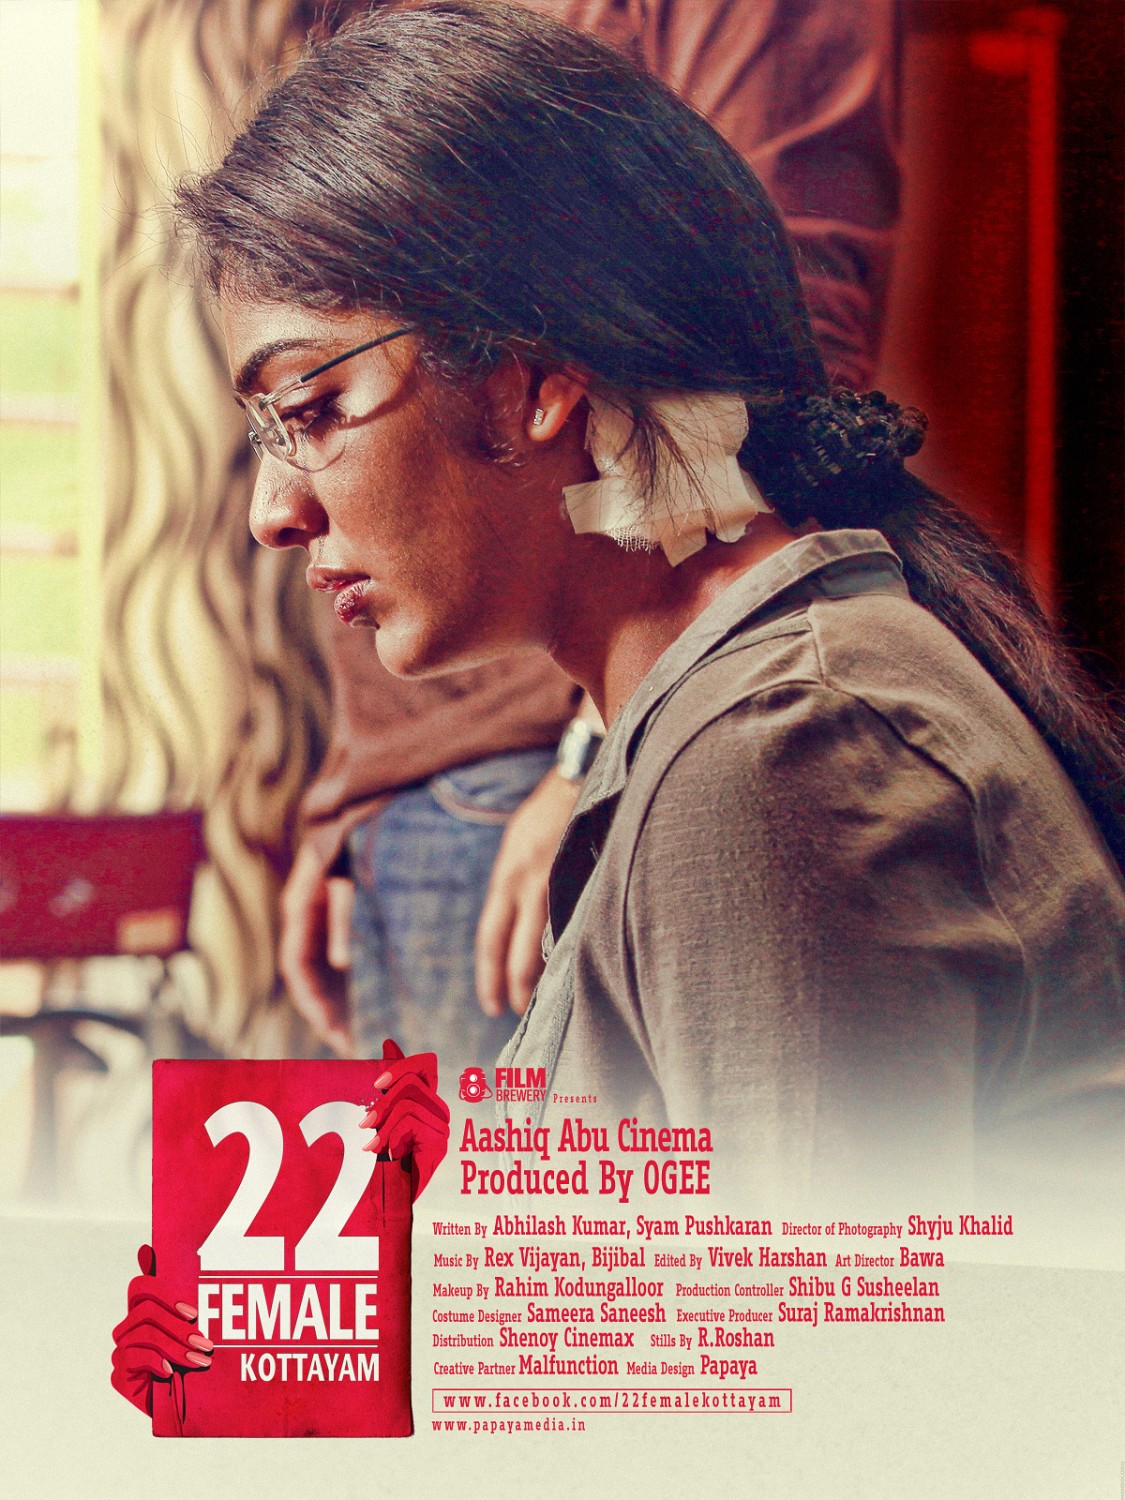 Extra Large Movie Poster Image for 22 Female Kottayam (#16 of 28)